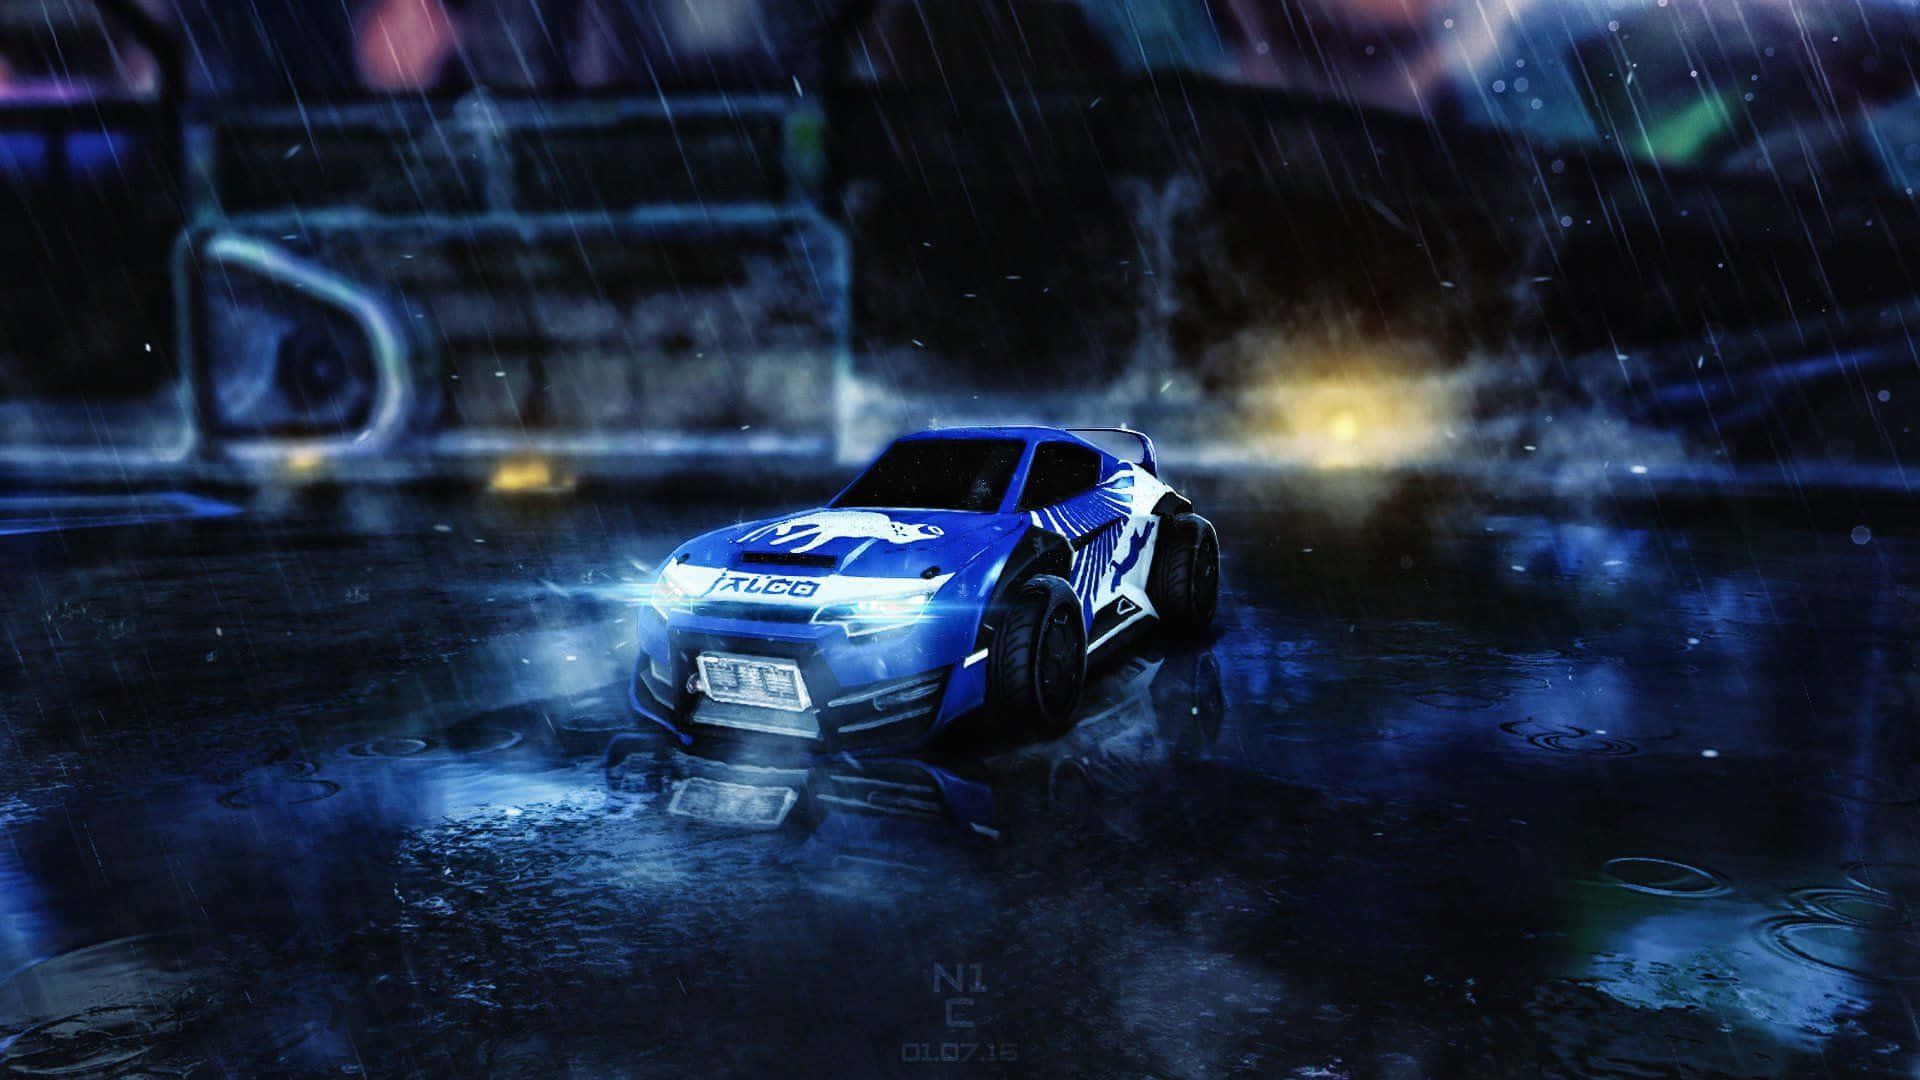 A Blue Car In The Rain